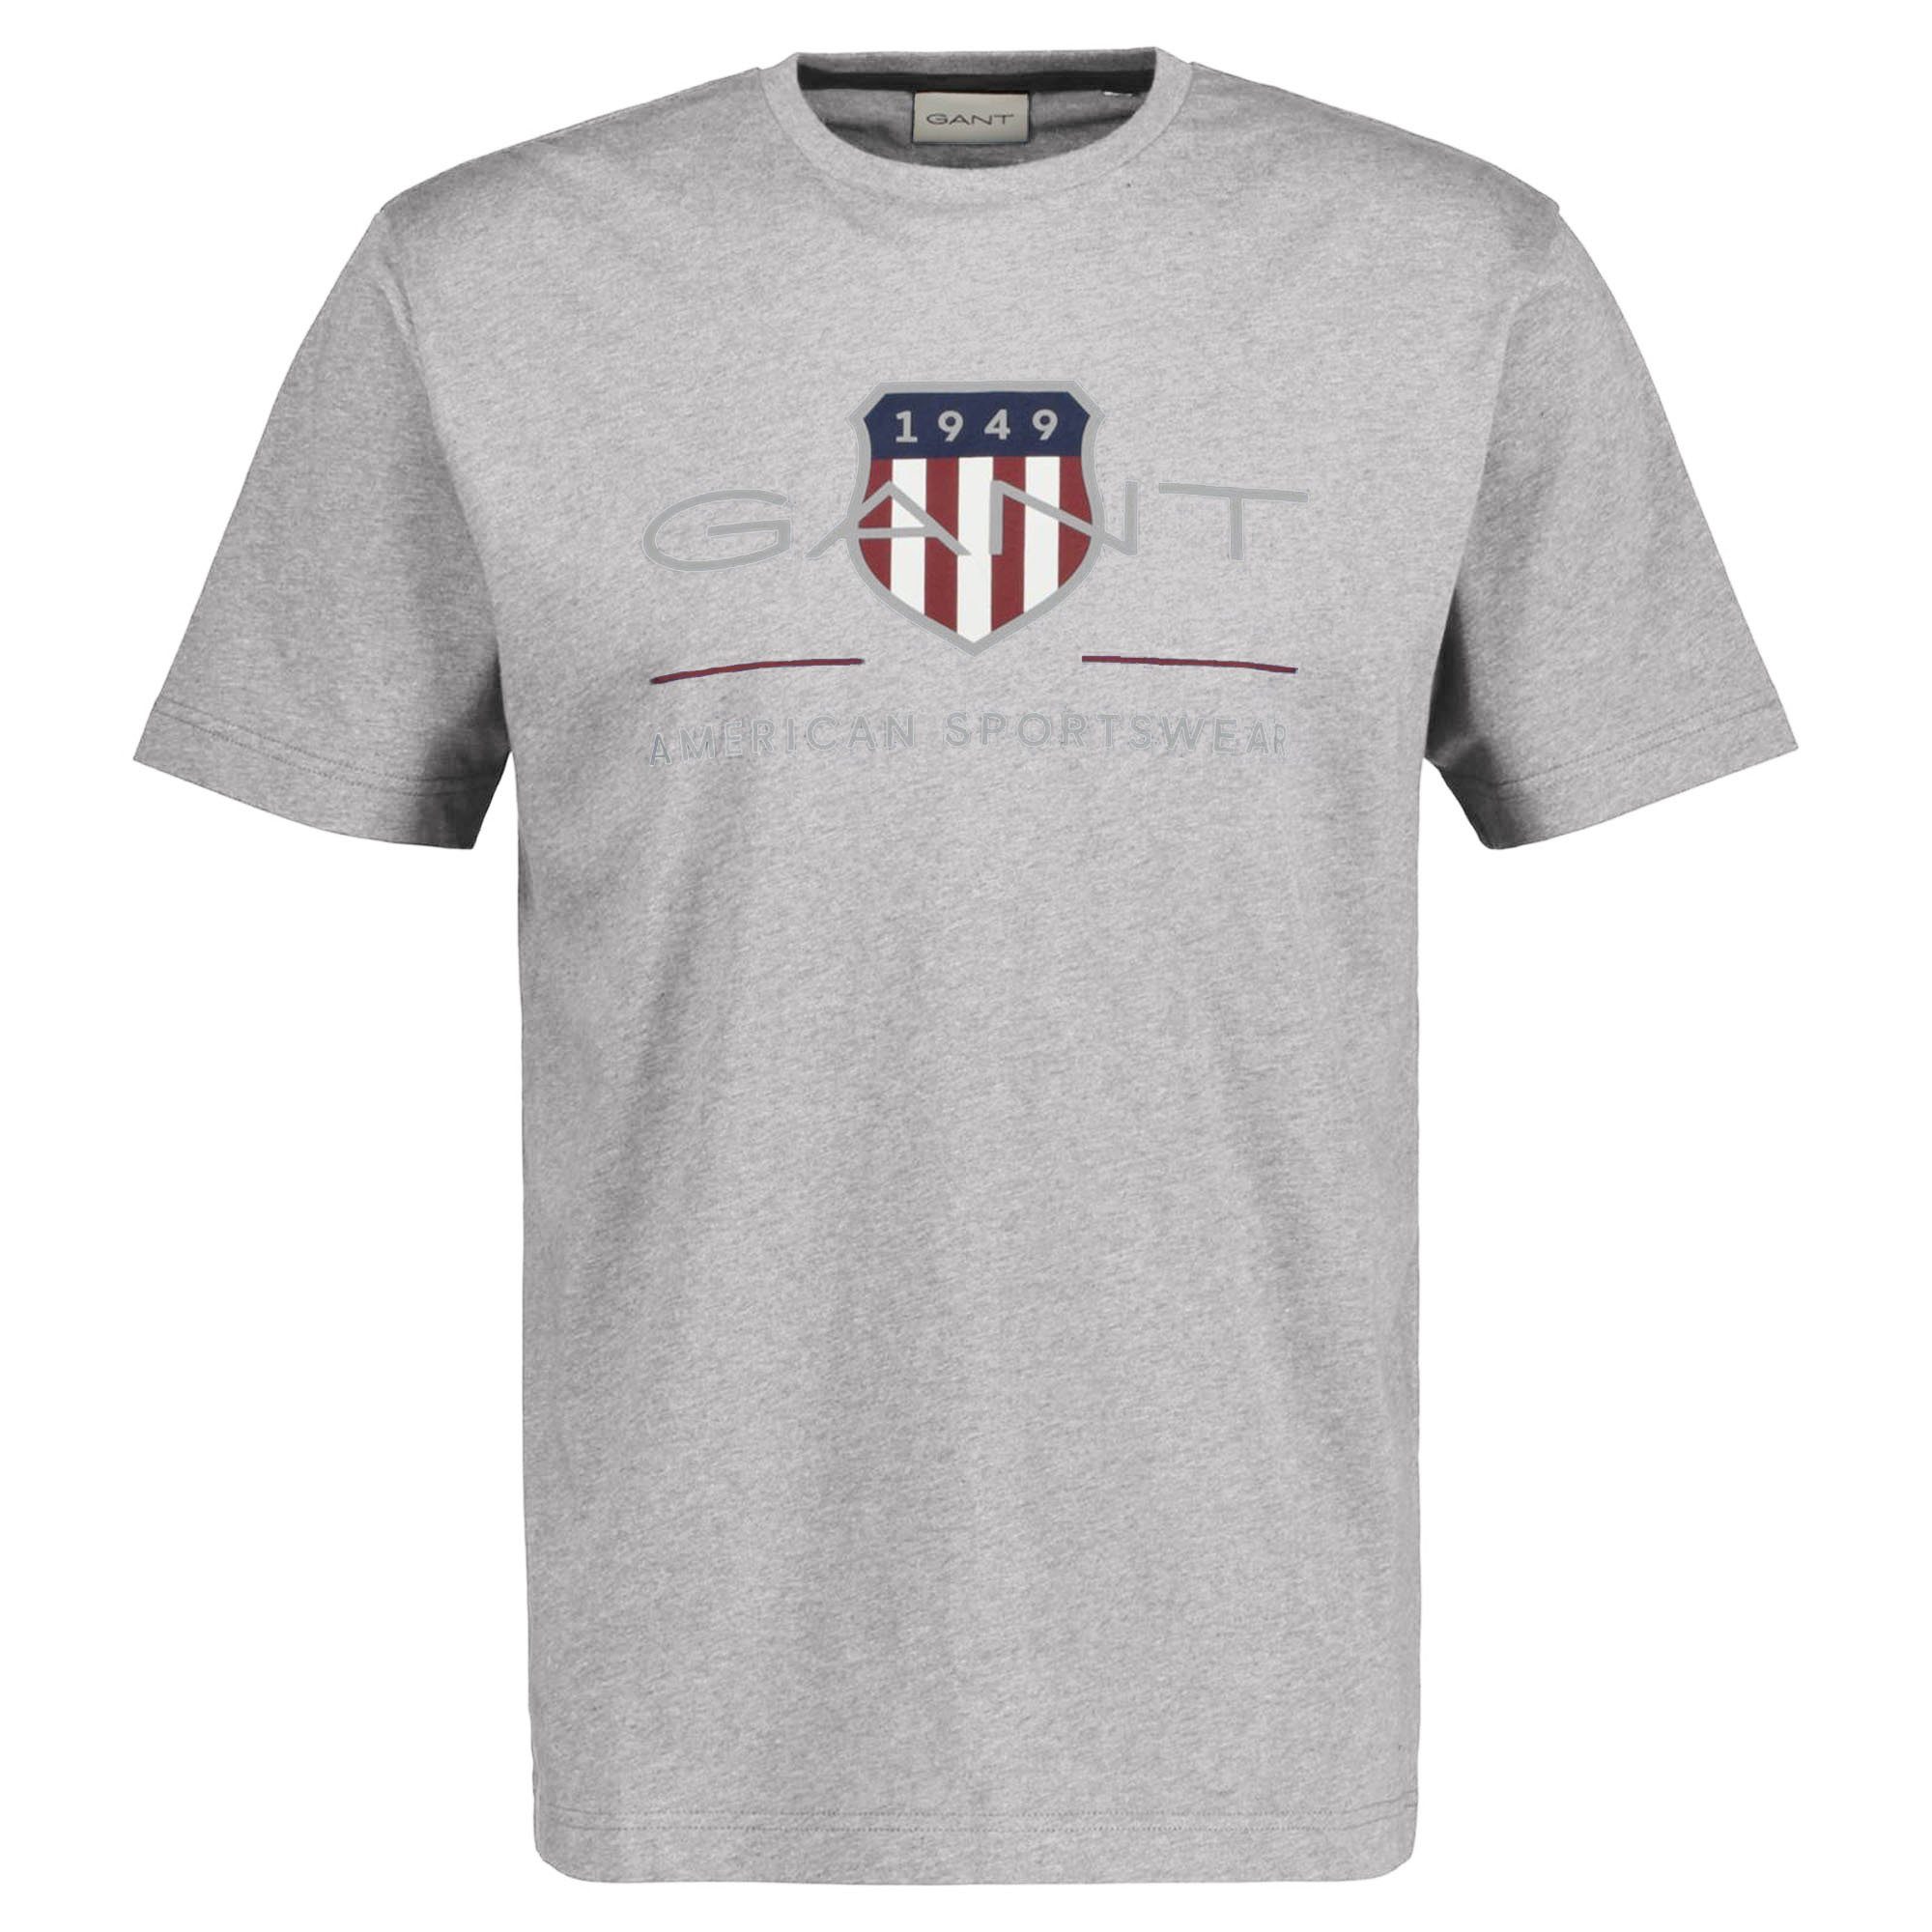 T-Shirt Herren Gant Grau ARCHIVE T-Shirt Rundhals SHIELD, - REGULAR